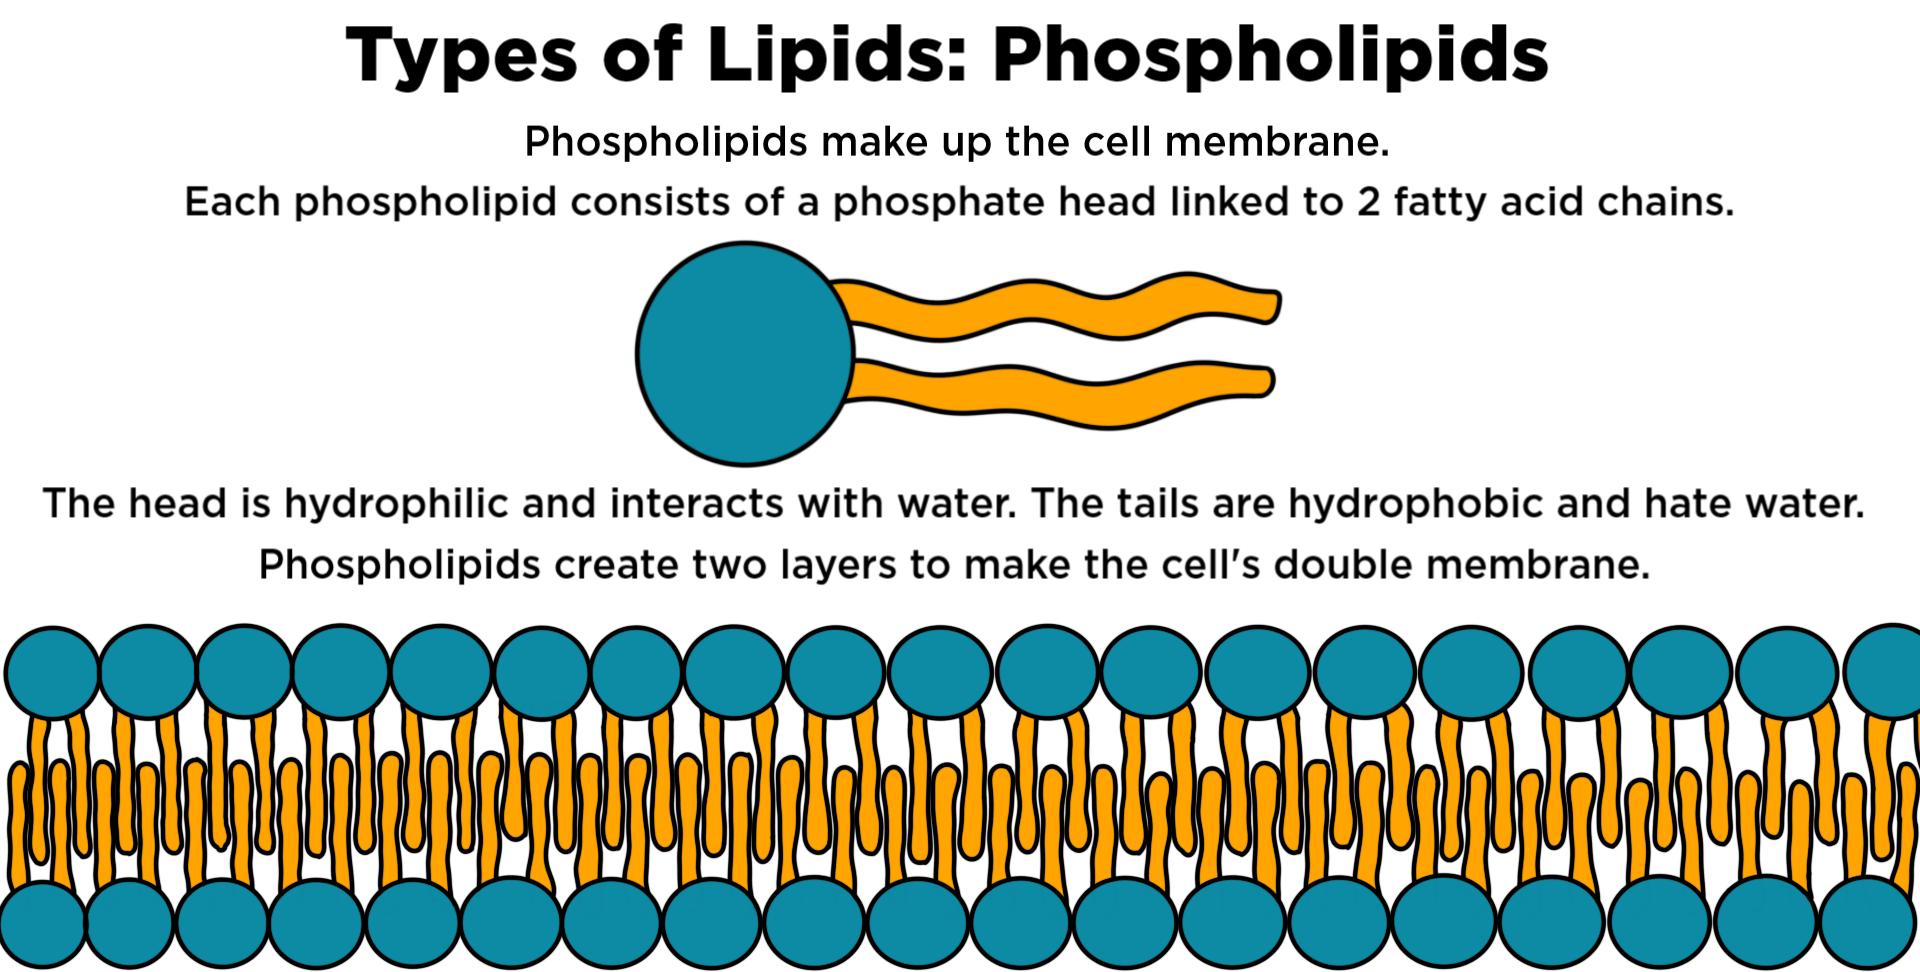 Types of Lipids: Phospholipids